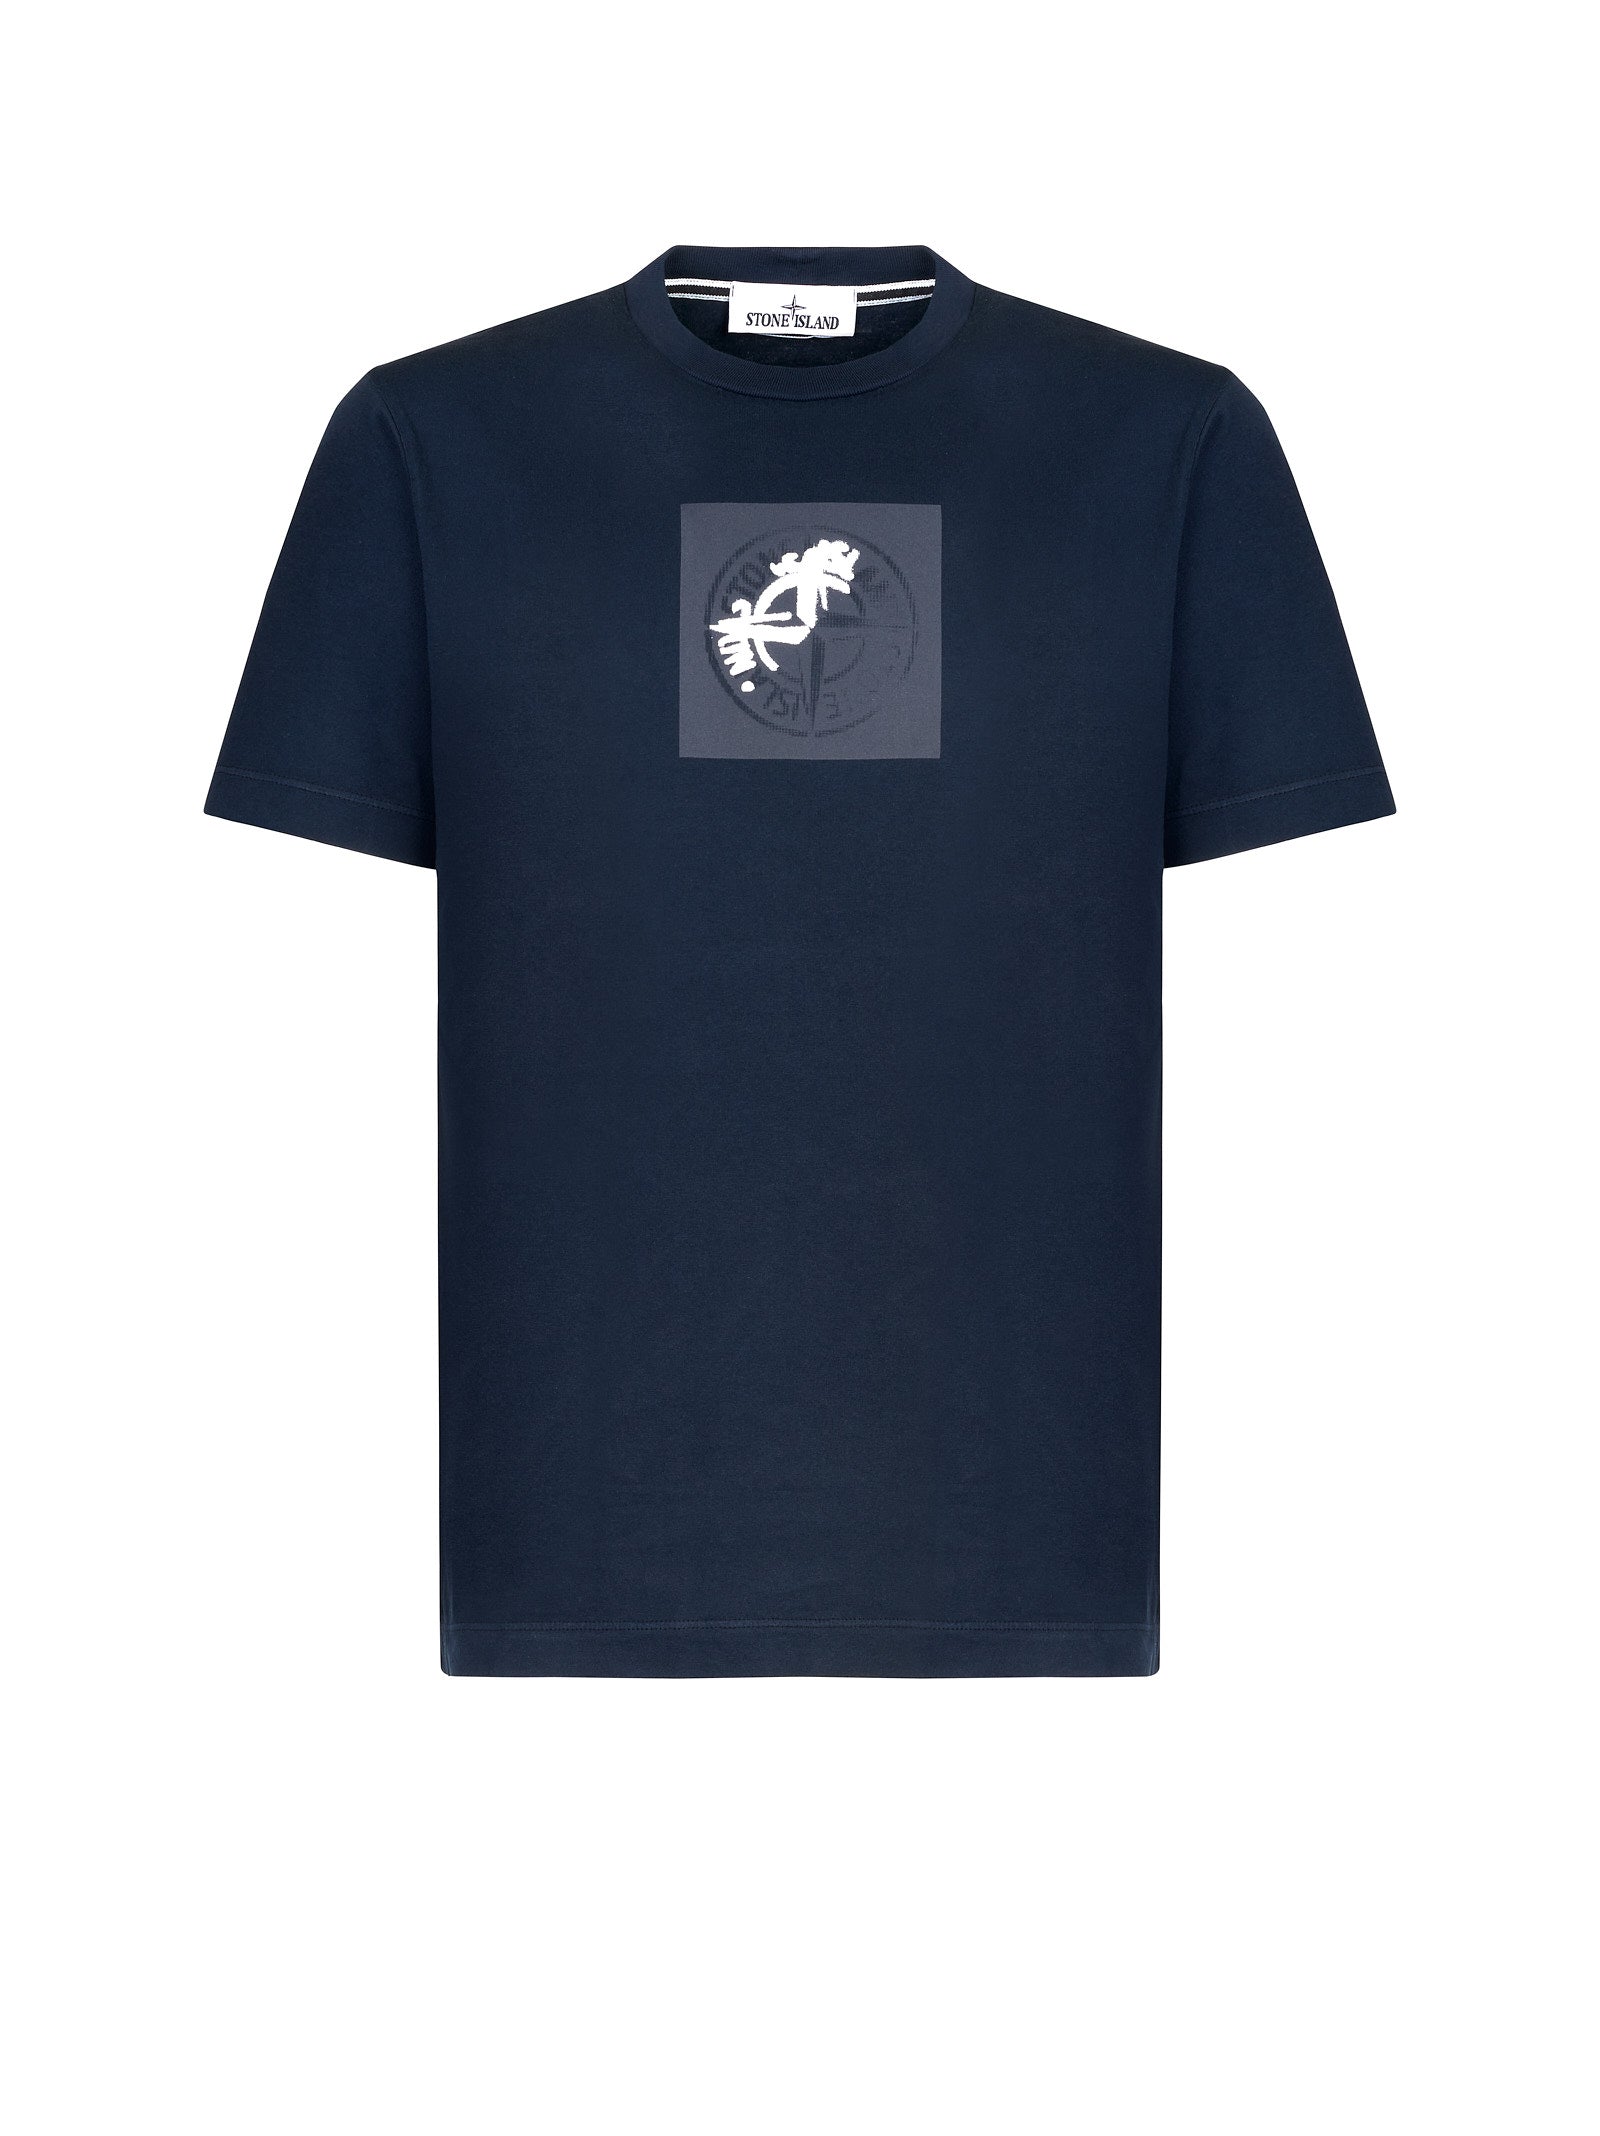 T-shirt STONE ISLAND
Blue